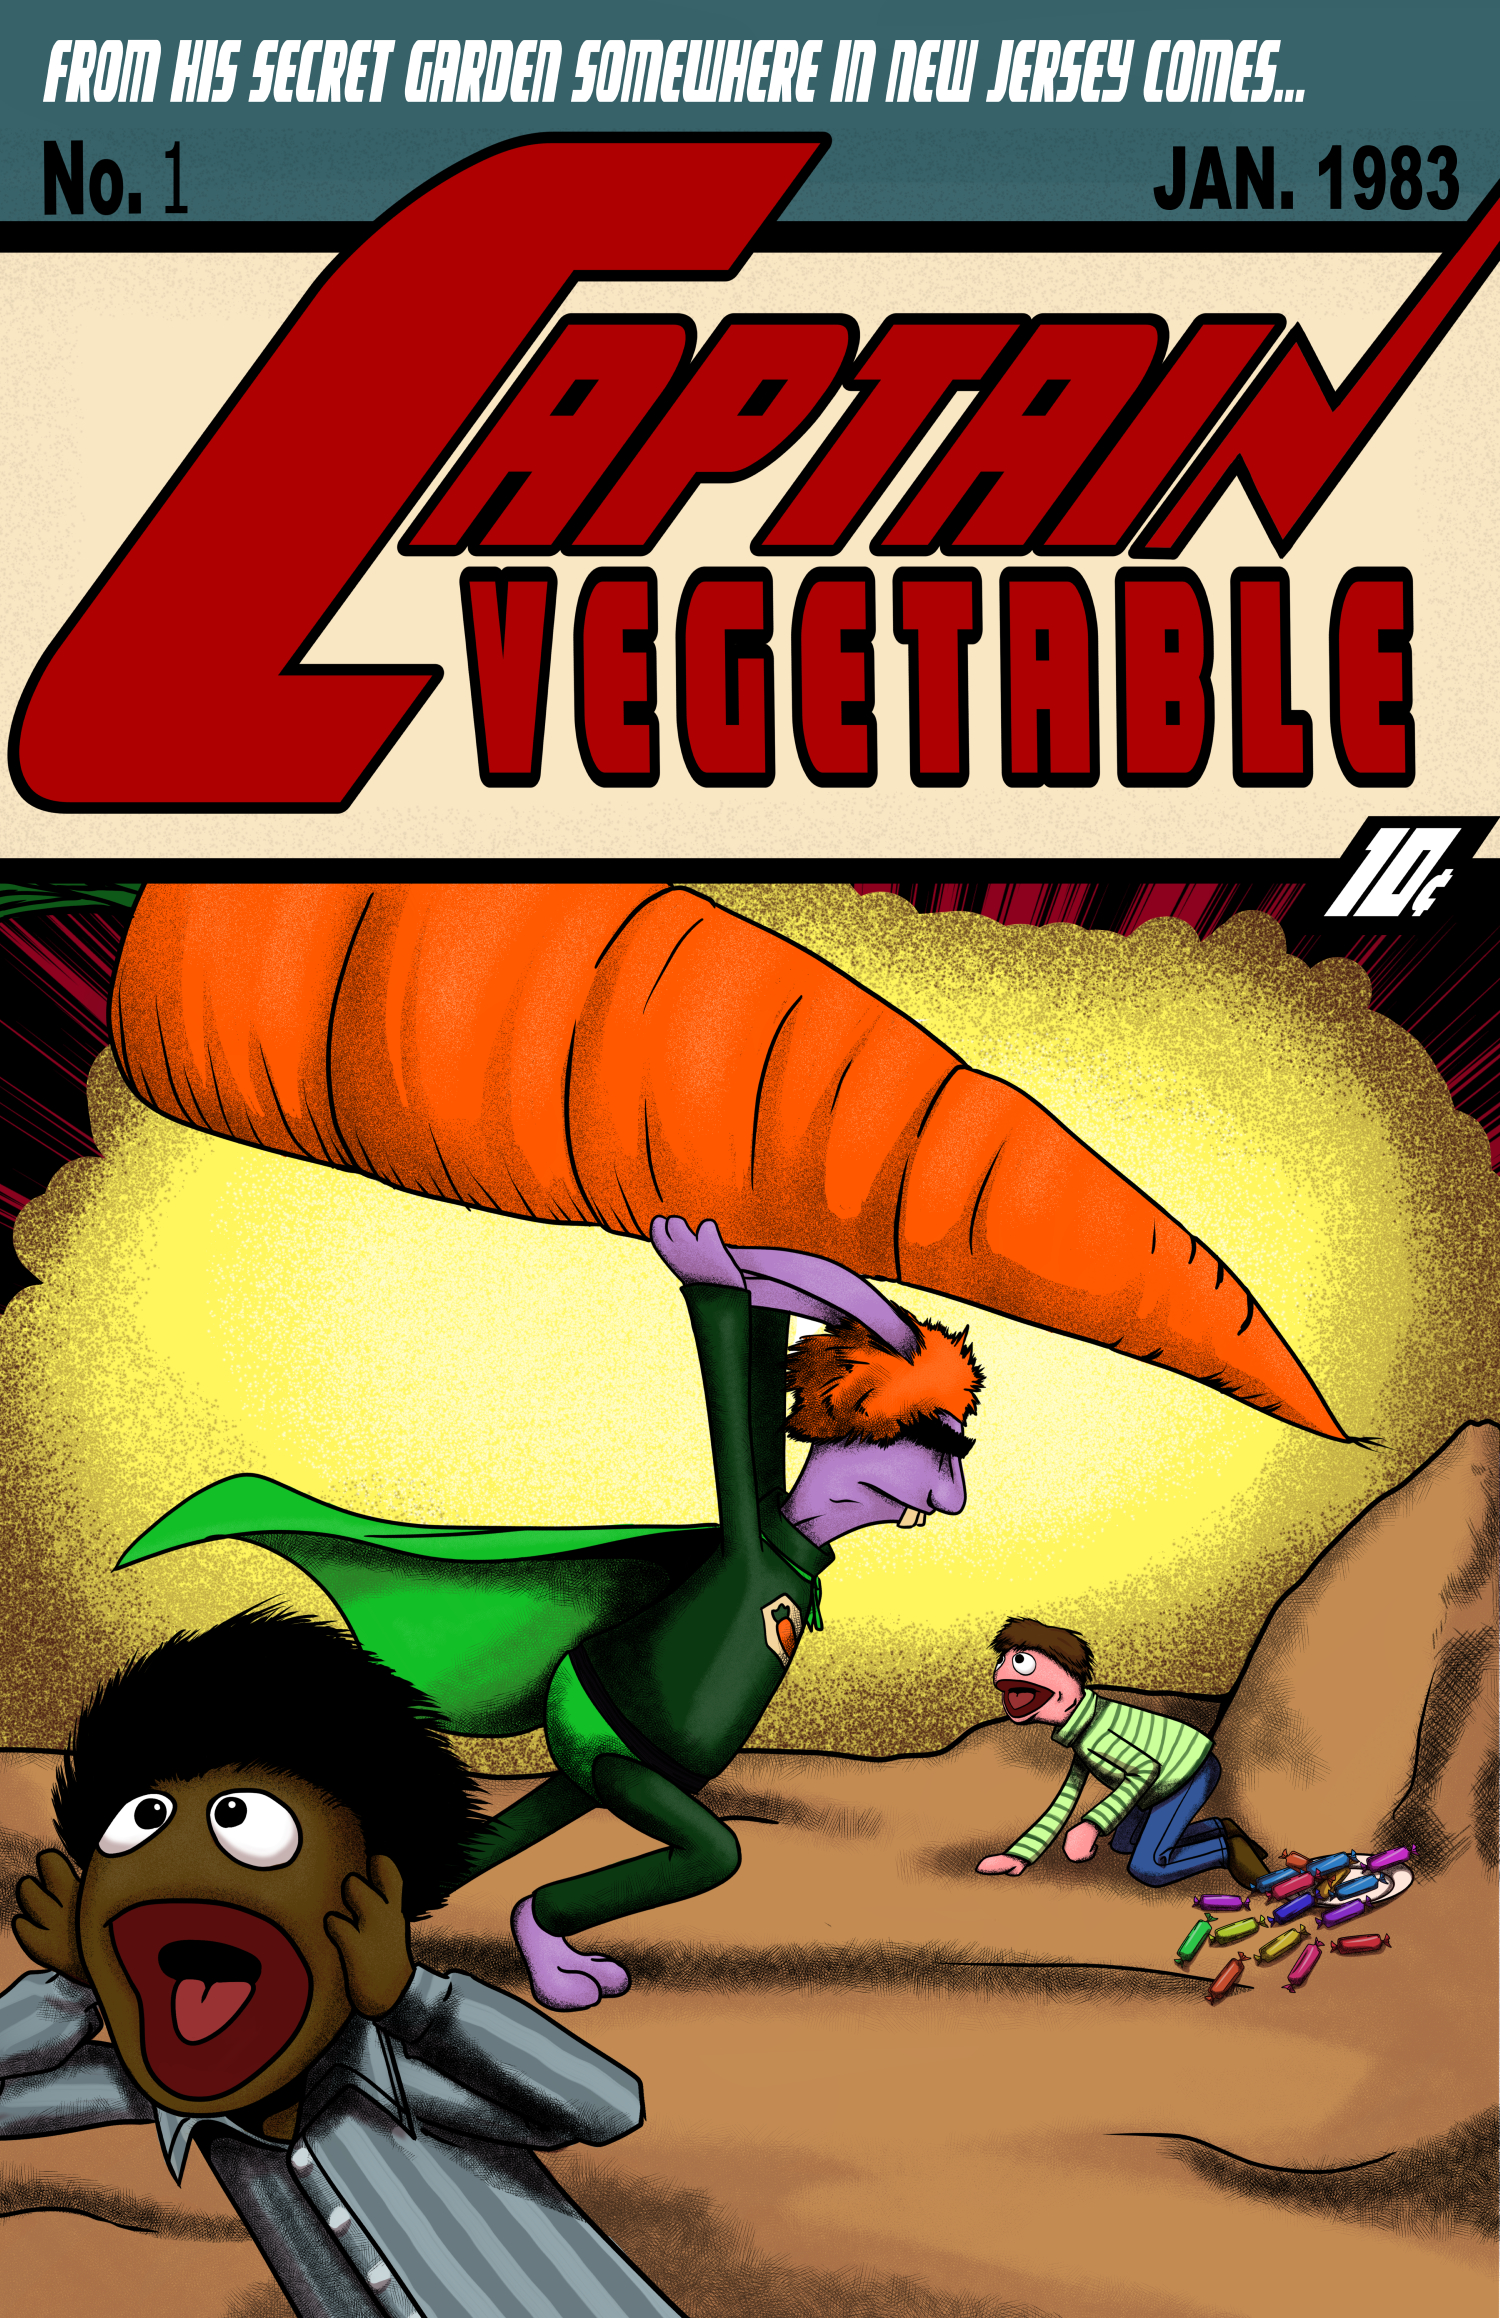 Captain Vegetable!